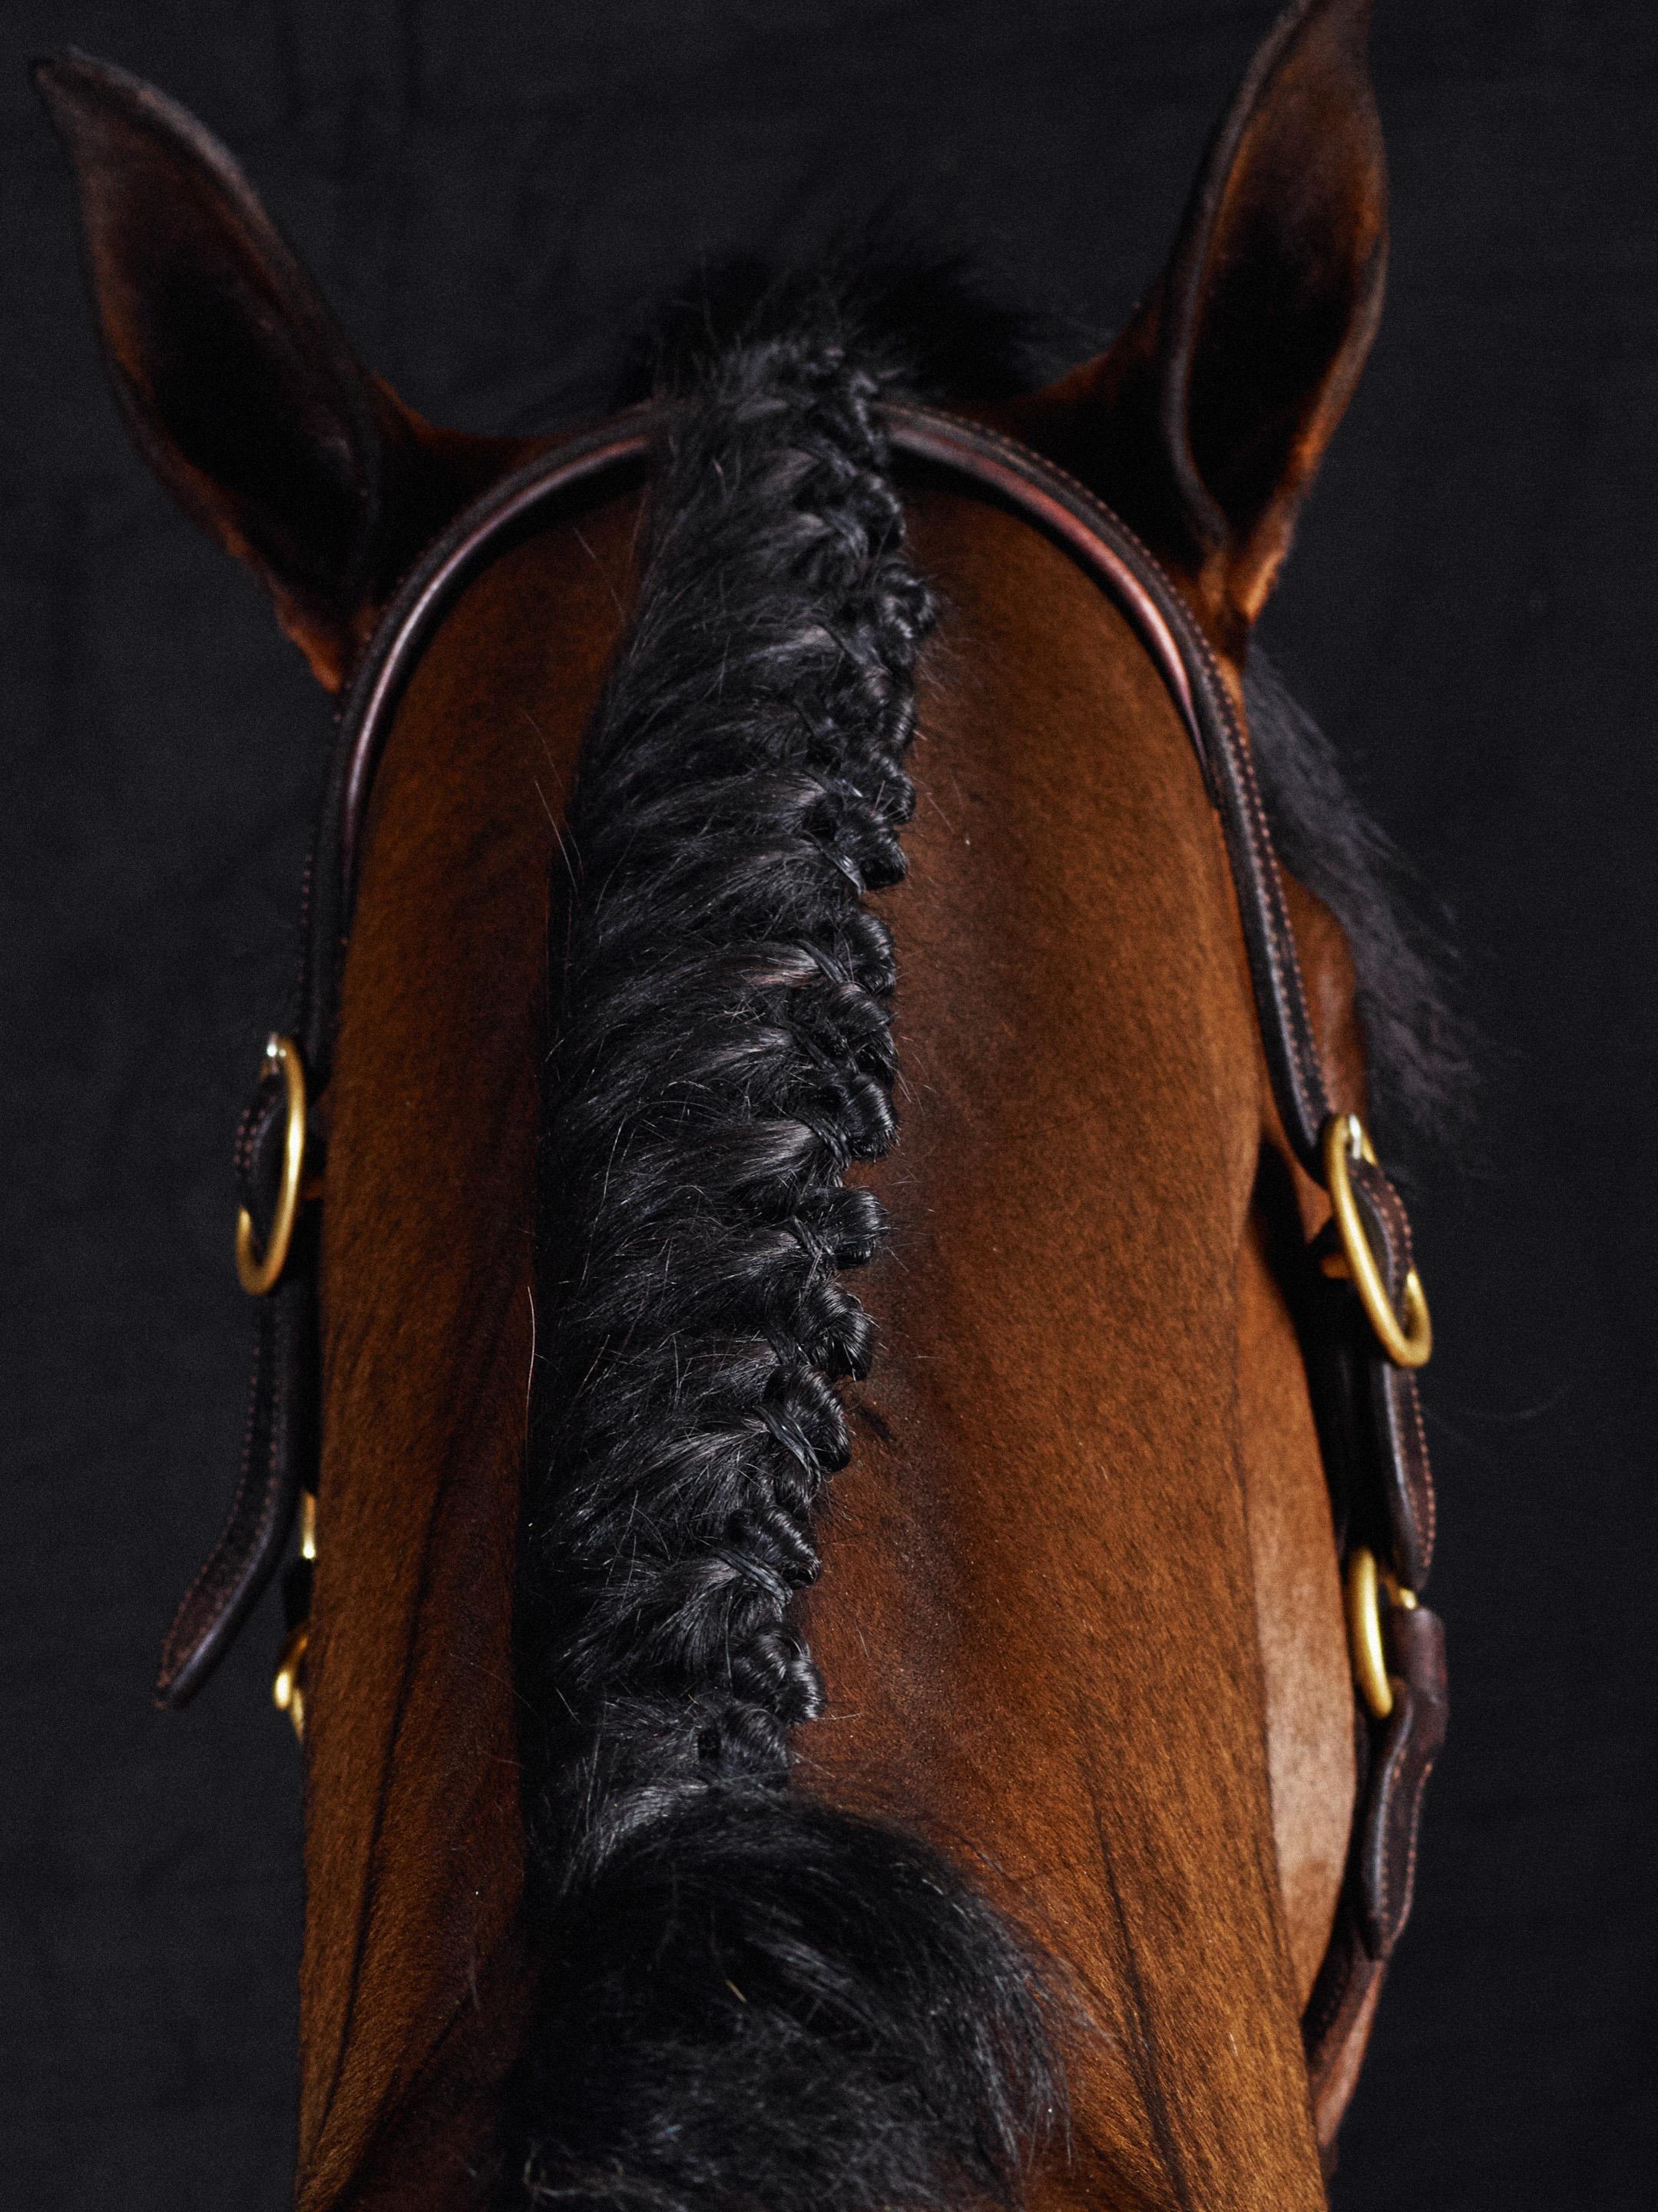 Lamerick II - Full Color Limited Edition Horse Portrait 2015 - Photograph by Juan Lamarca